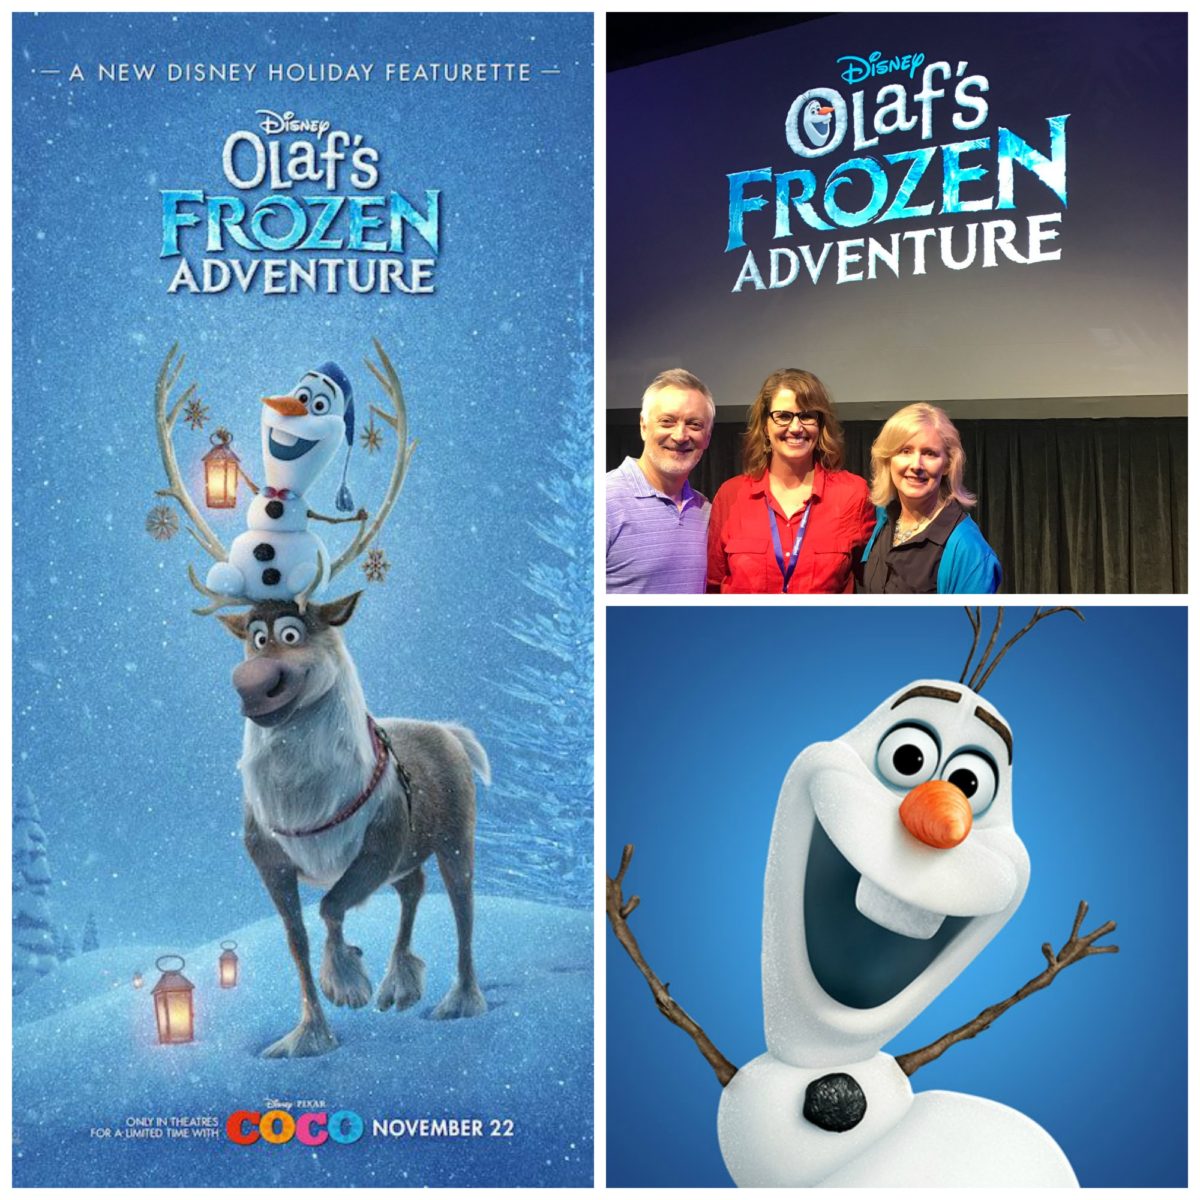 Olaf's frozen adventure photos. 